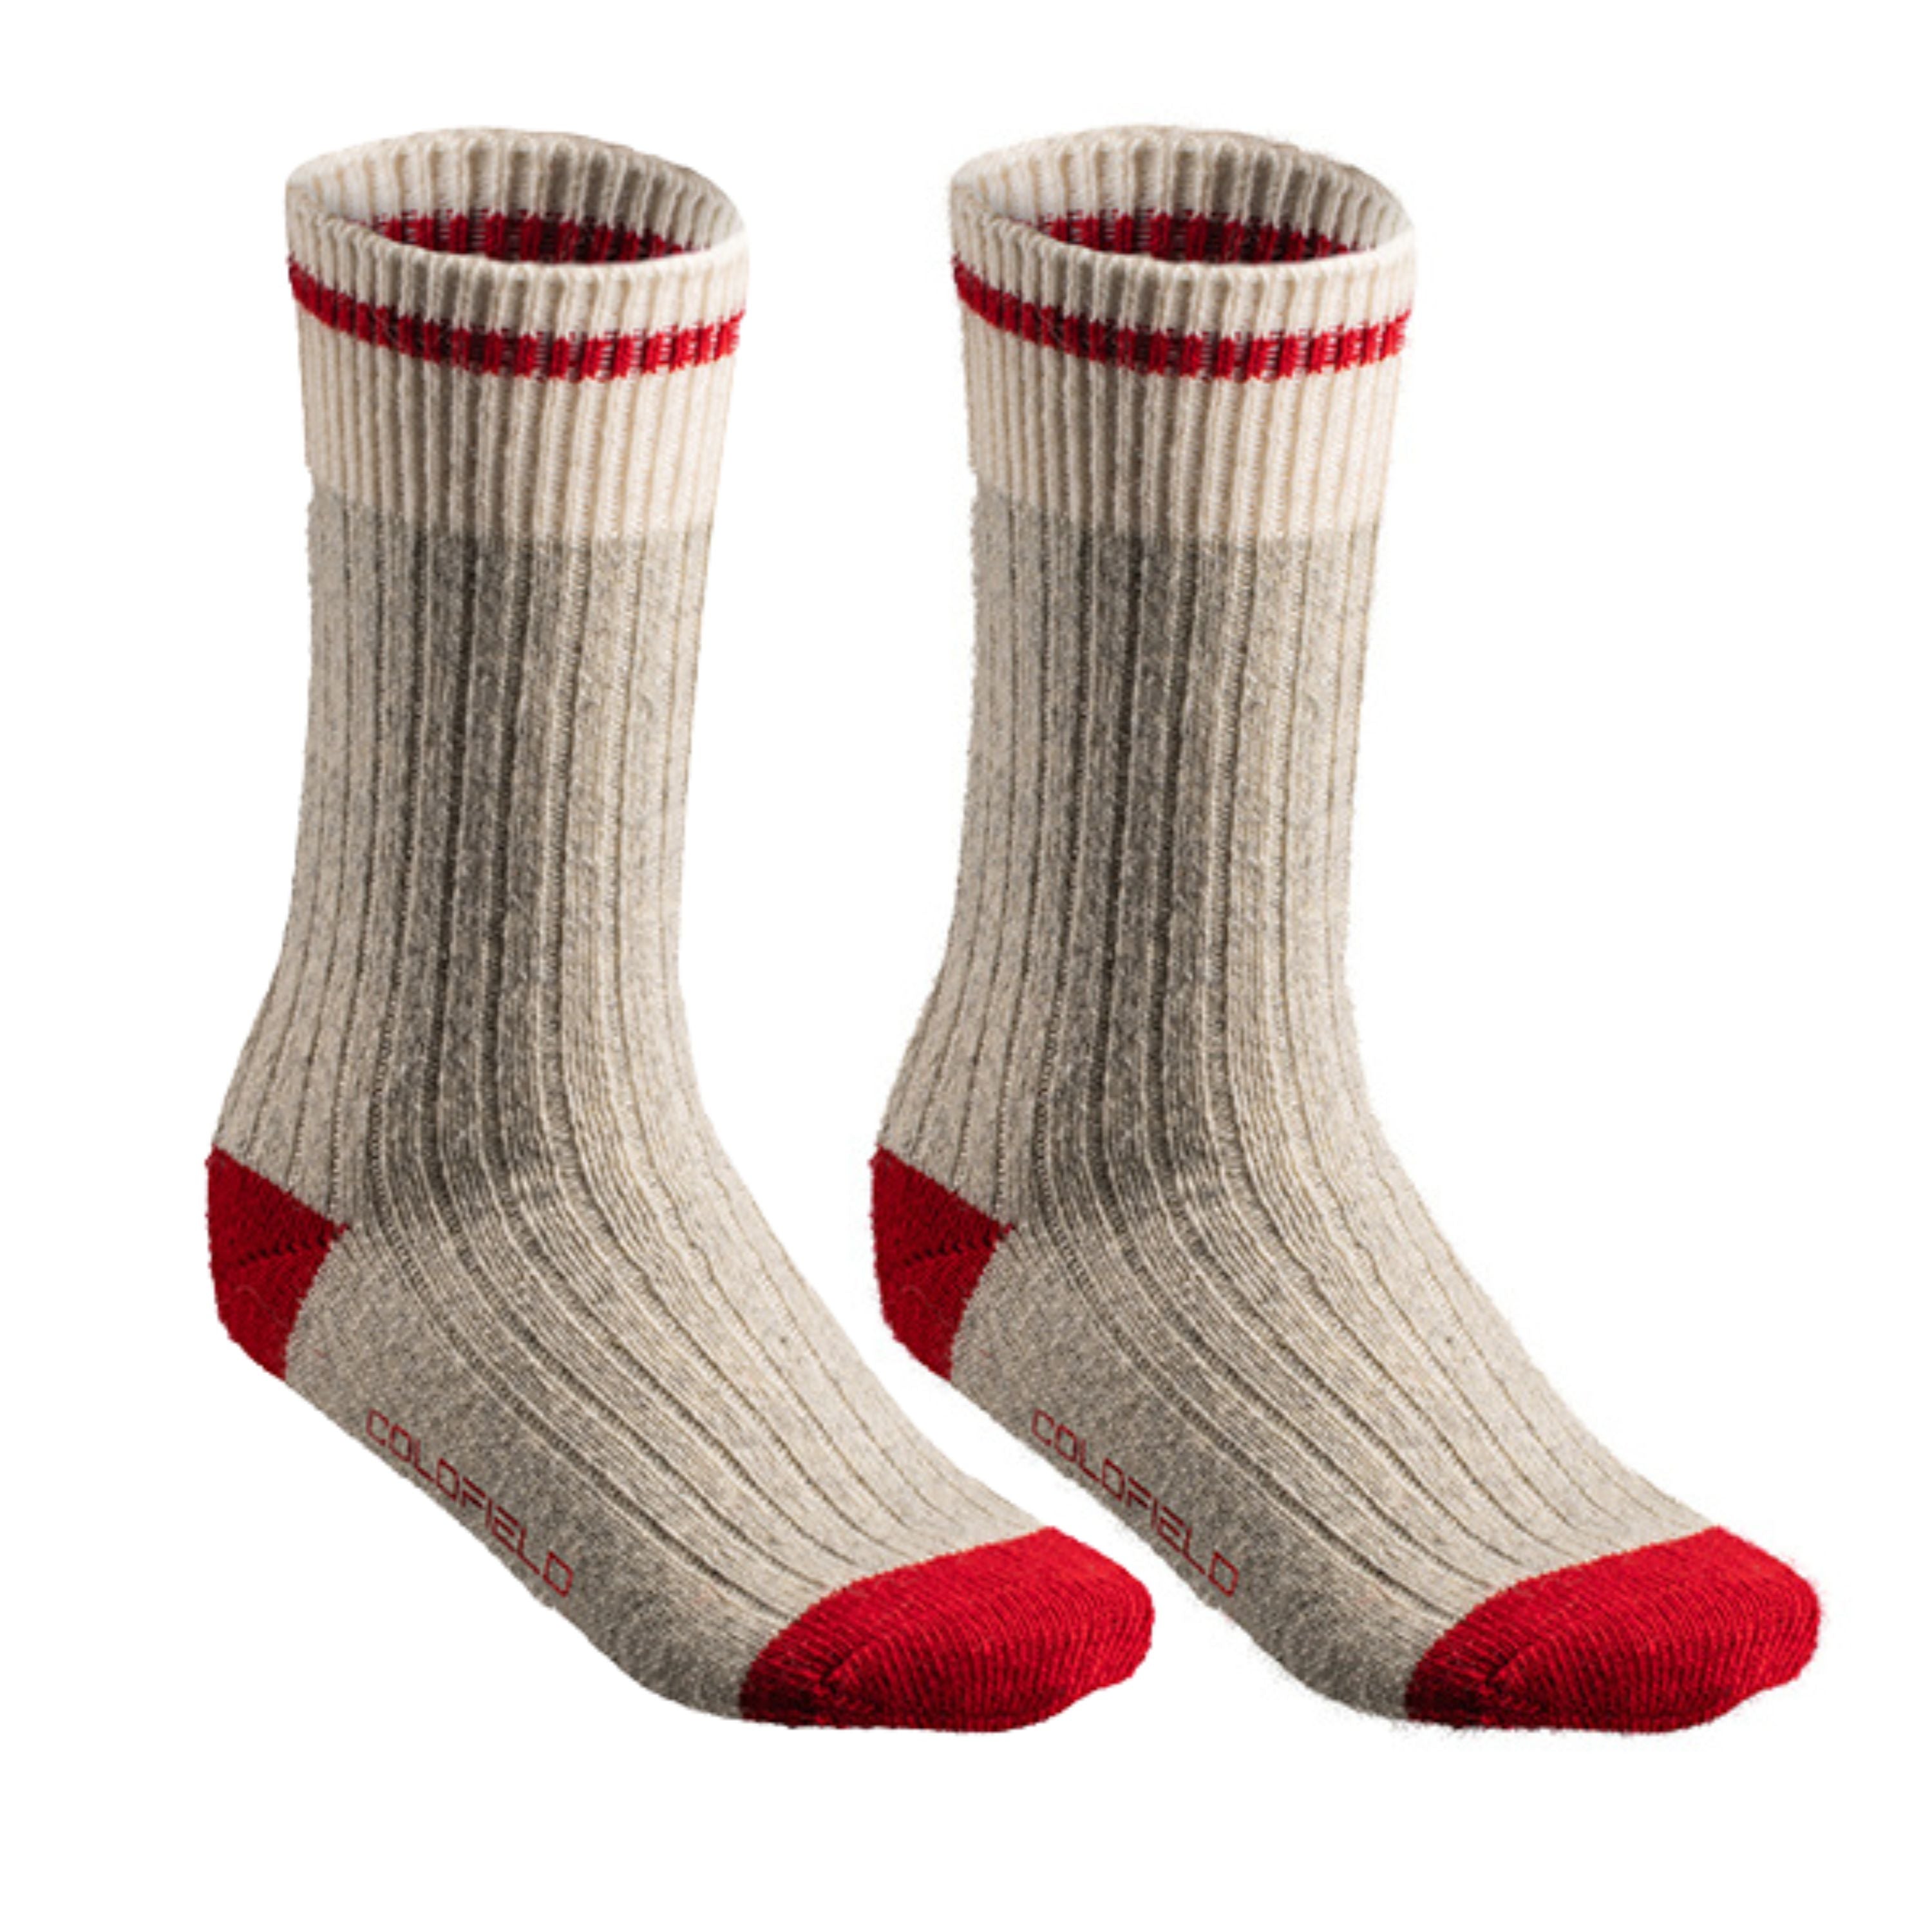 Merino wool socks with stripes - Unisex